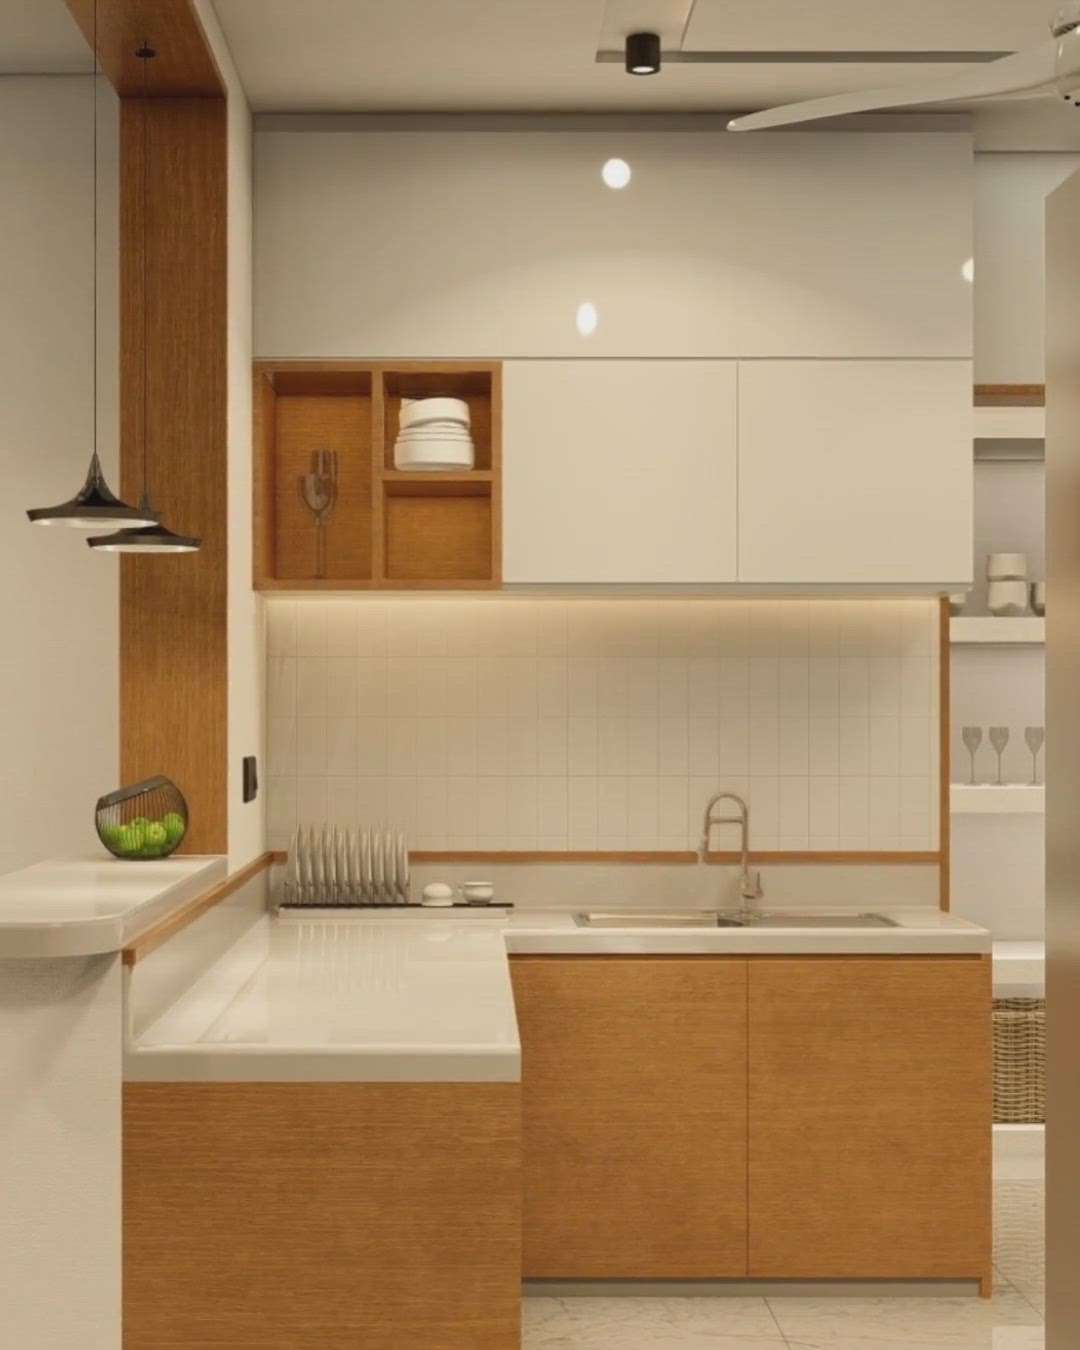 Kitchen InteriorDesign
Design : SALT
.
.
#saltdesigns #saltarchitecture #saltindia #ModularKitchen #KitchenInterior #KitchenCabinet #KitchenIdeas #KitchenRenovation #KitchenCeilingDesign #WoodenKitchen #ClosedKitchen #KitchenCeilingDesign #KitchenTable #KitchenTiles #all_kerala #Kollam #spatialuxdesigns #spatialux #spatialdesign